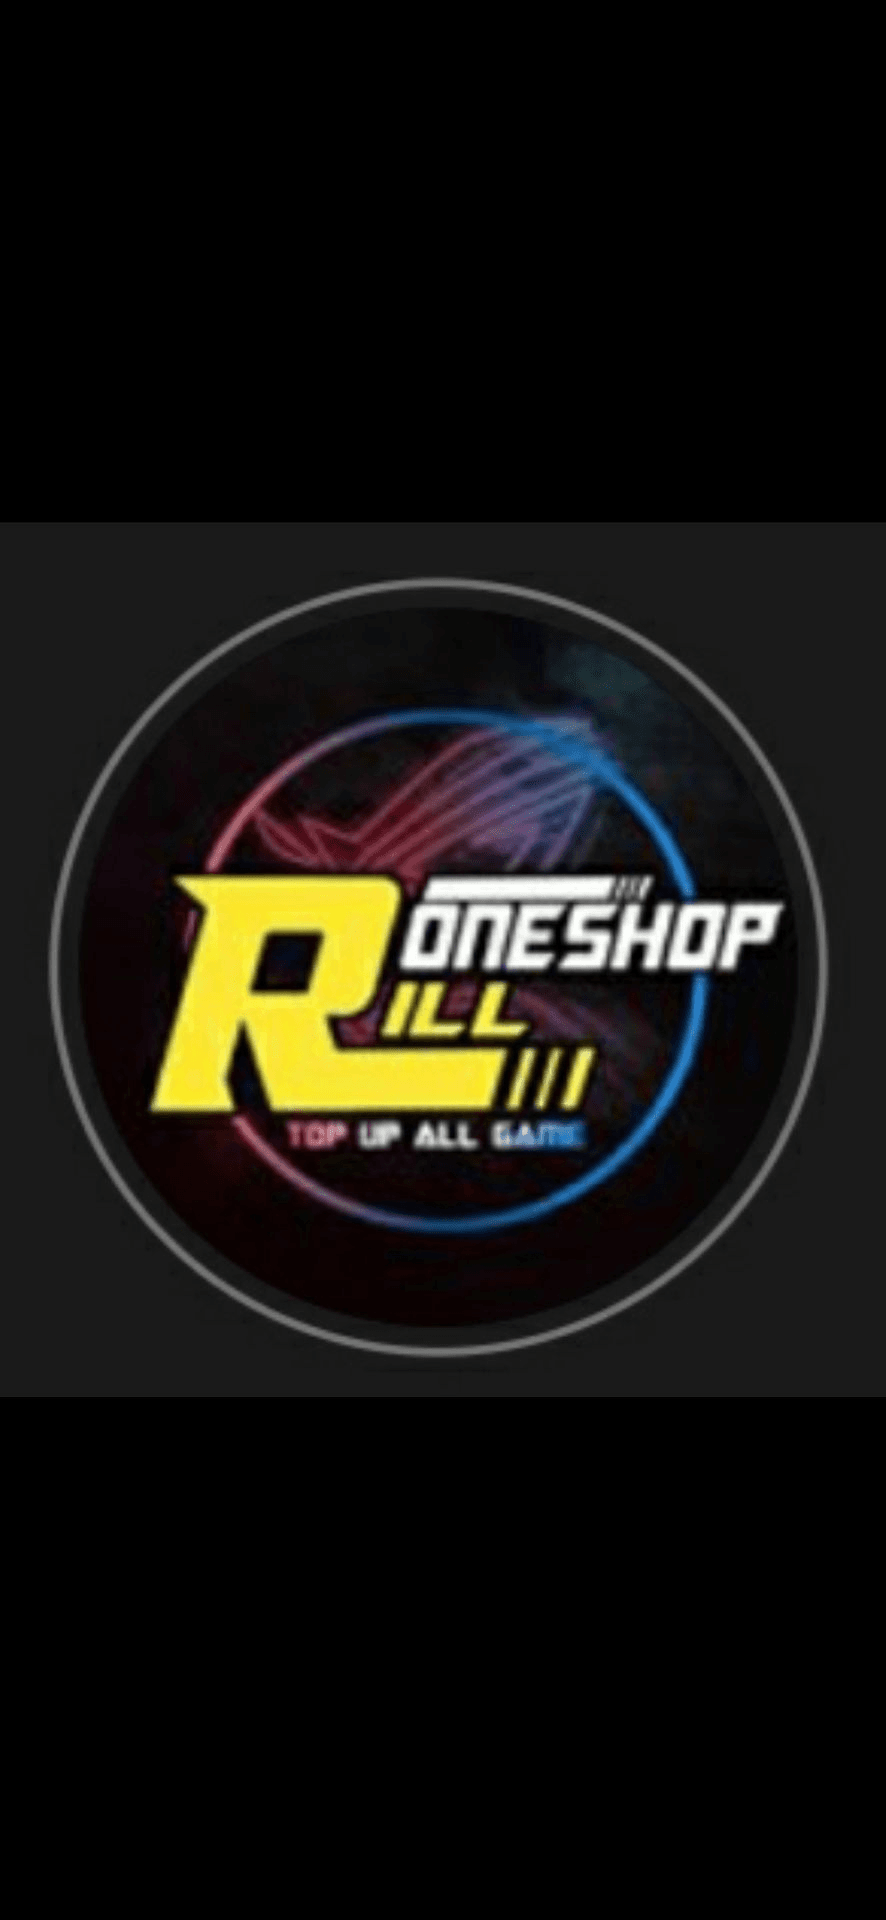 avatar Rillshop Topup